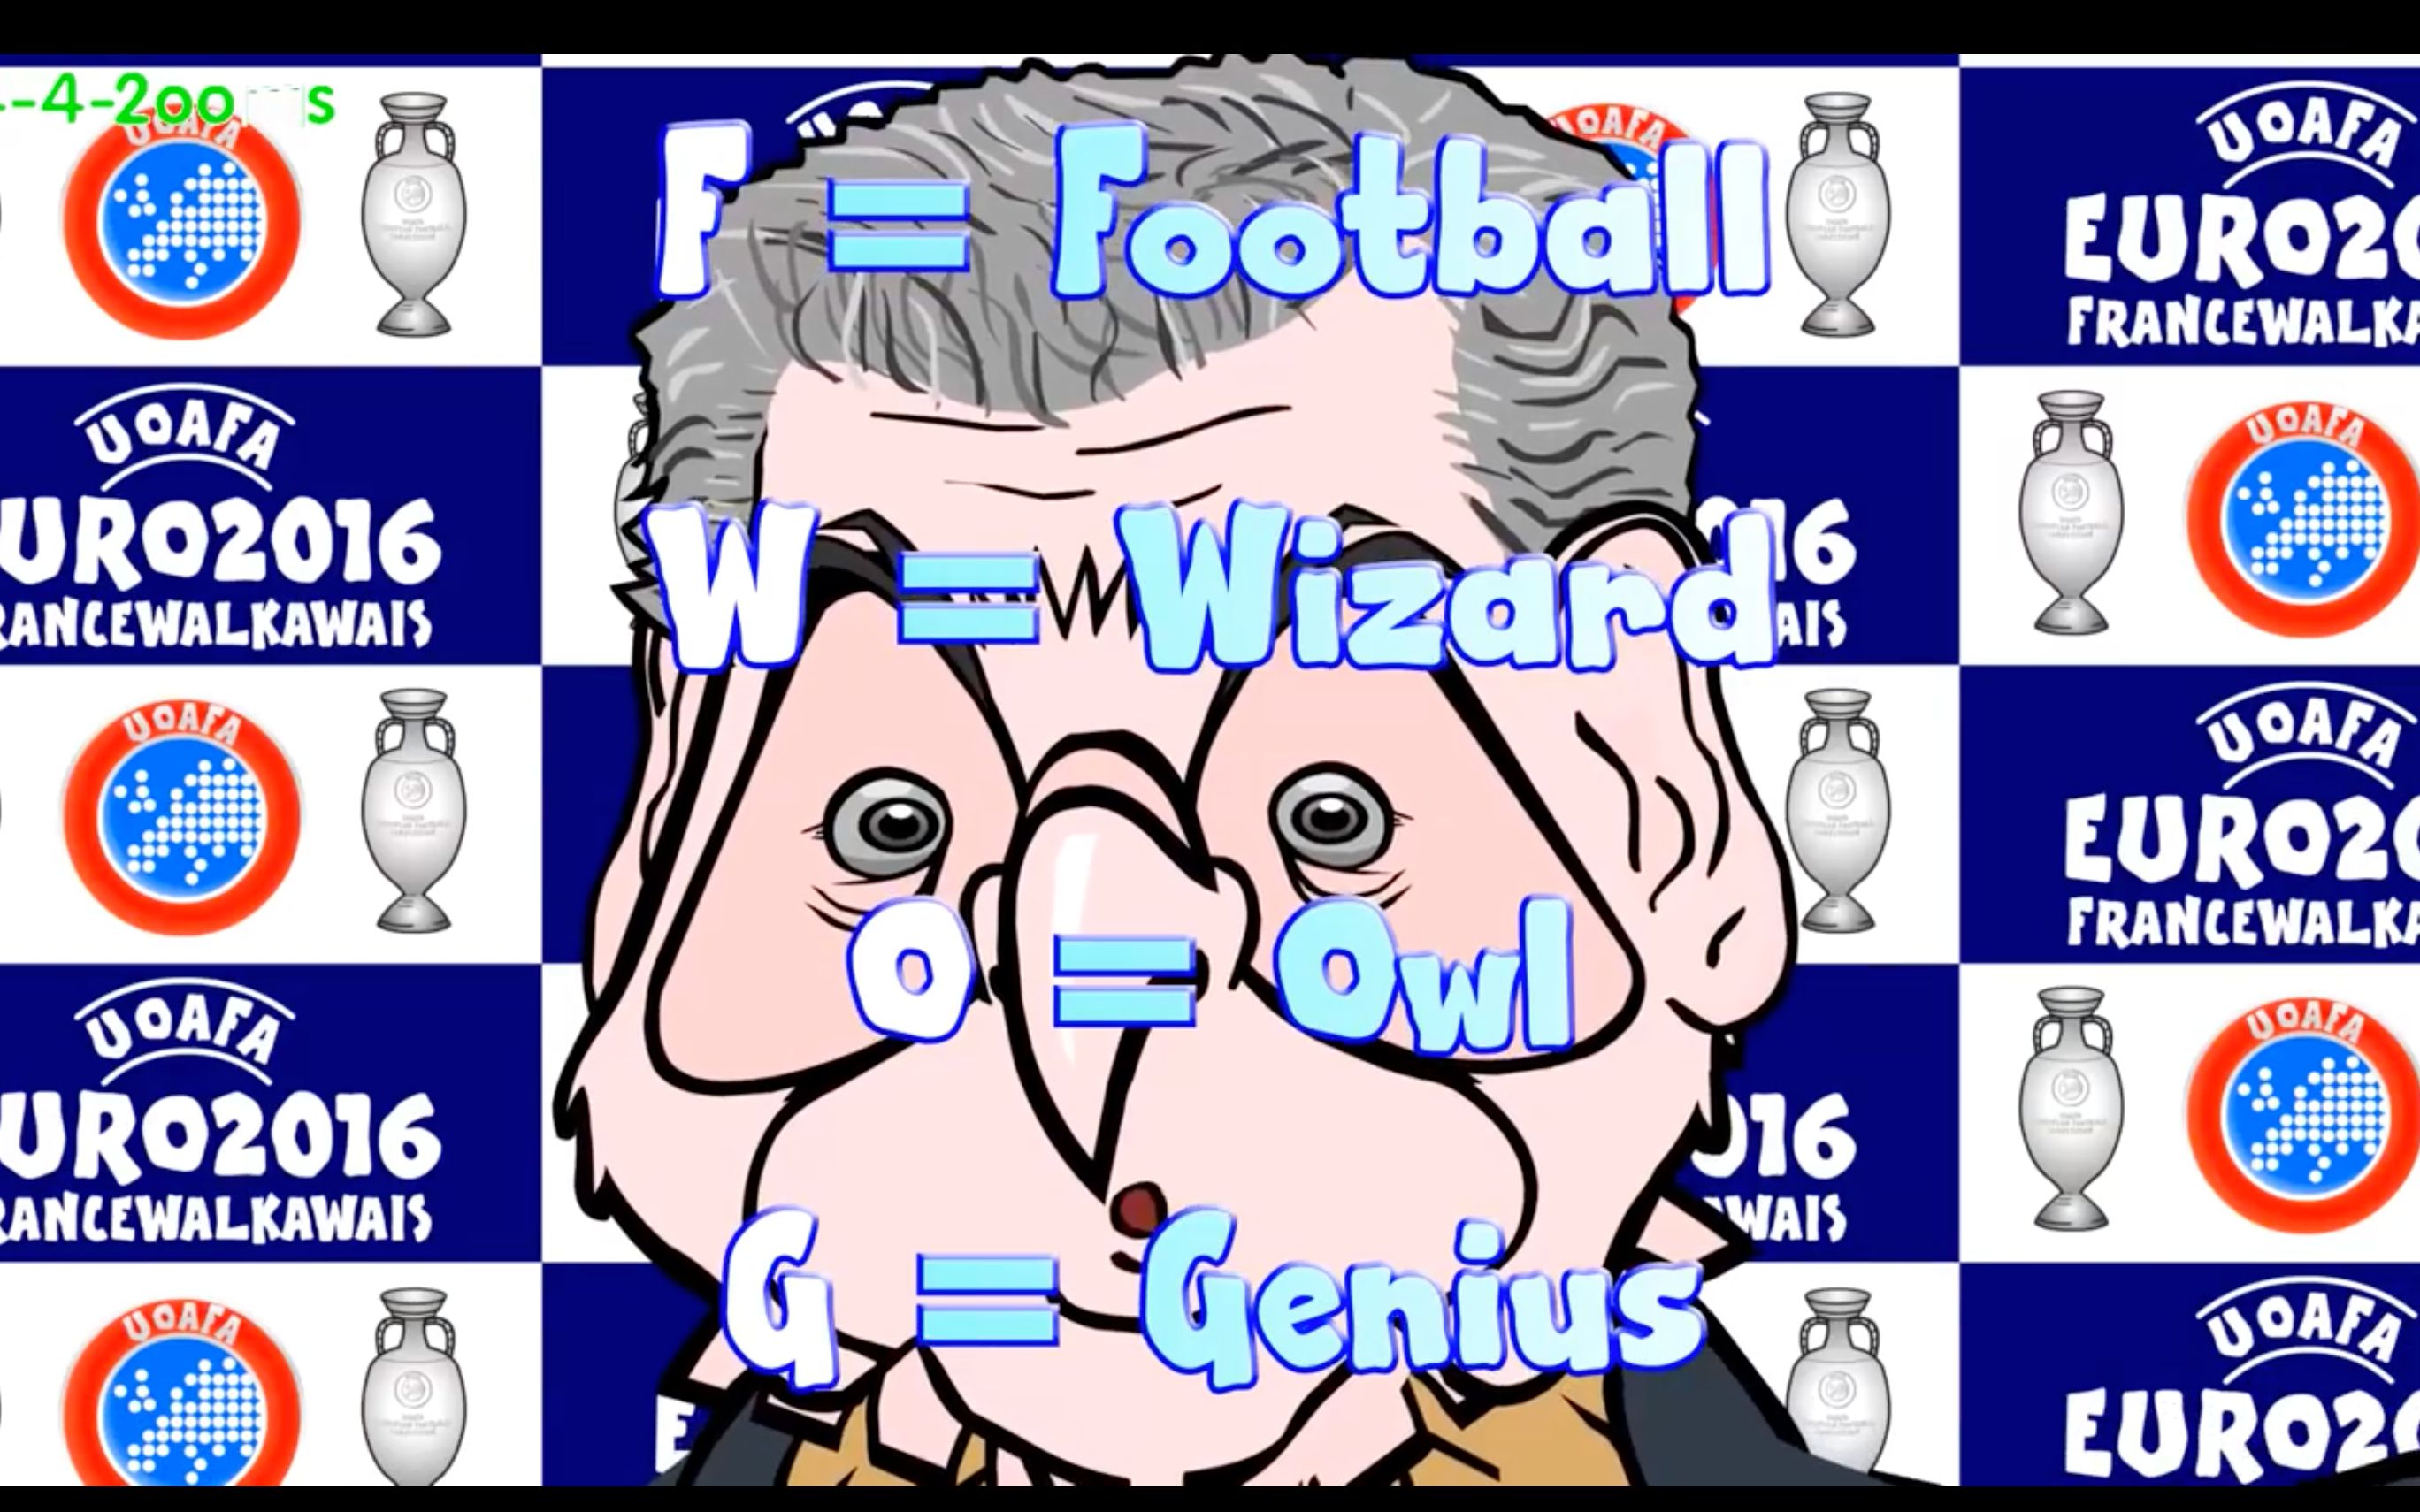 【442oons经典回顾--中字】原版霍太公之歌——Football Wizard Owl Genius